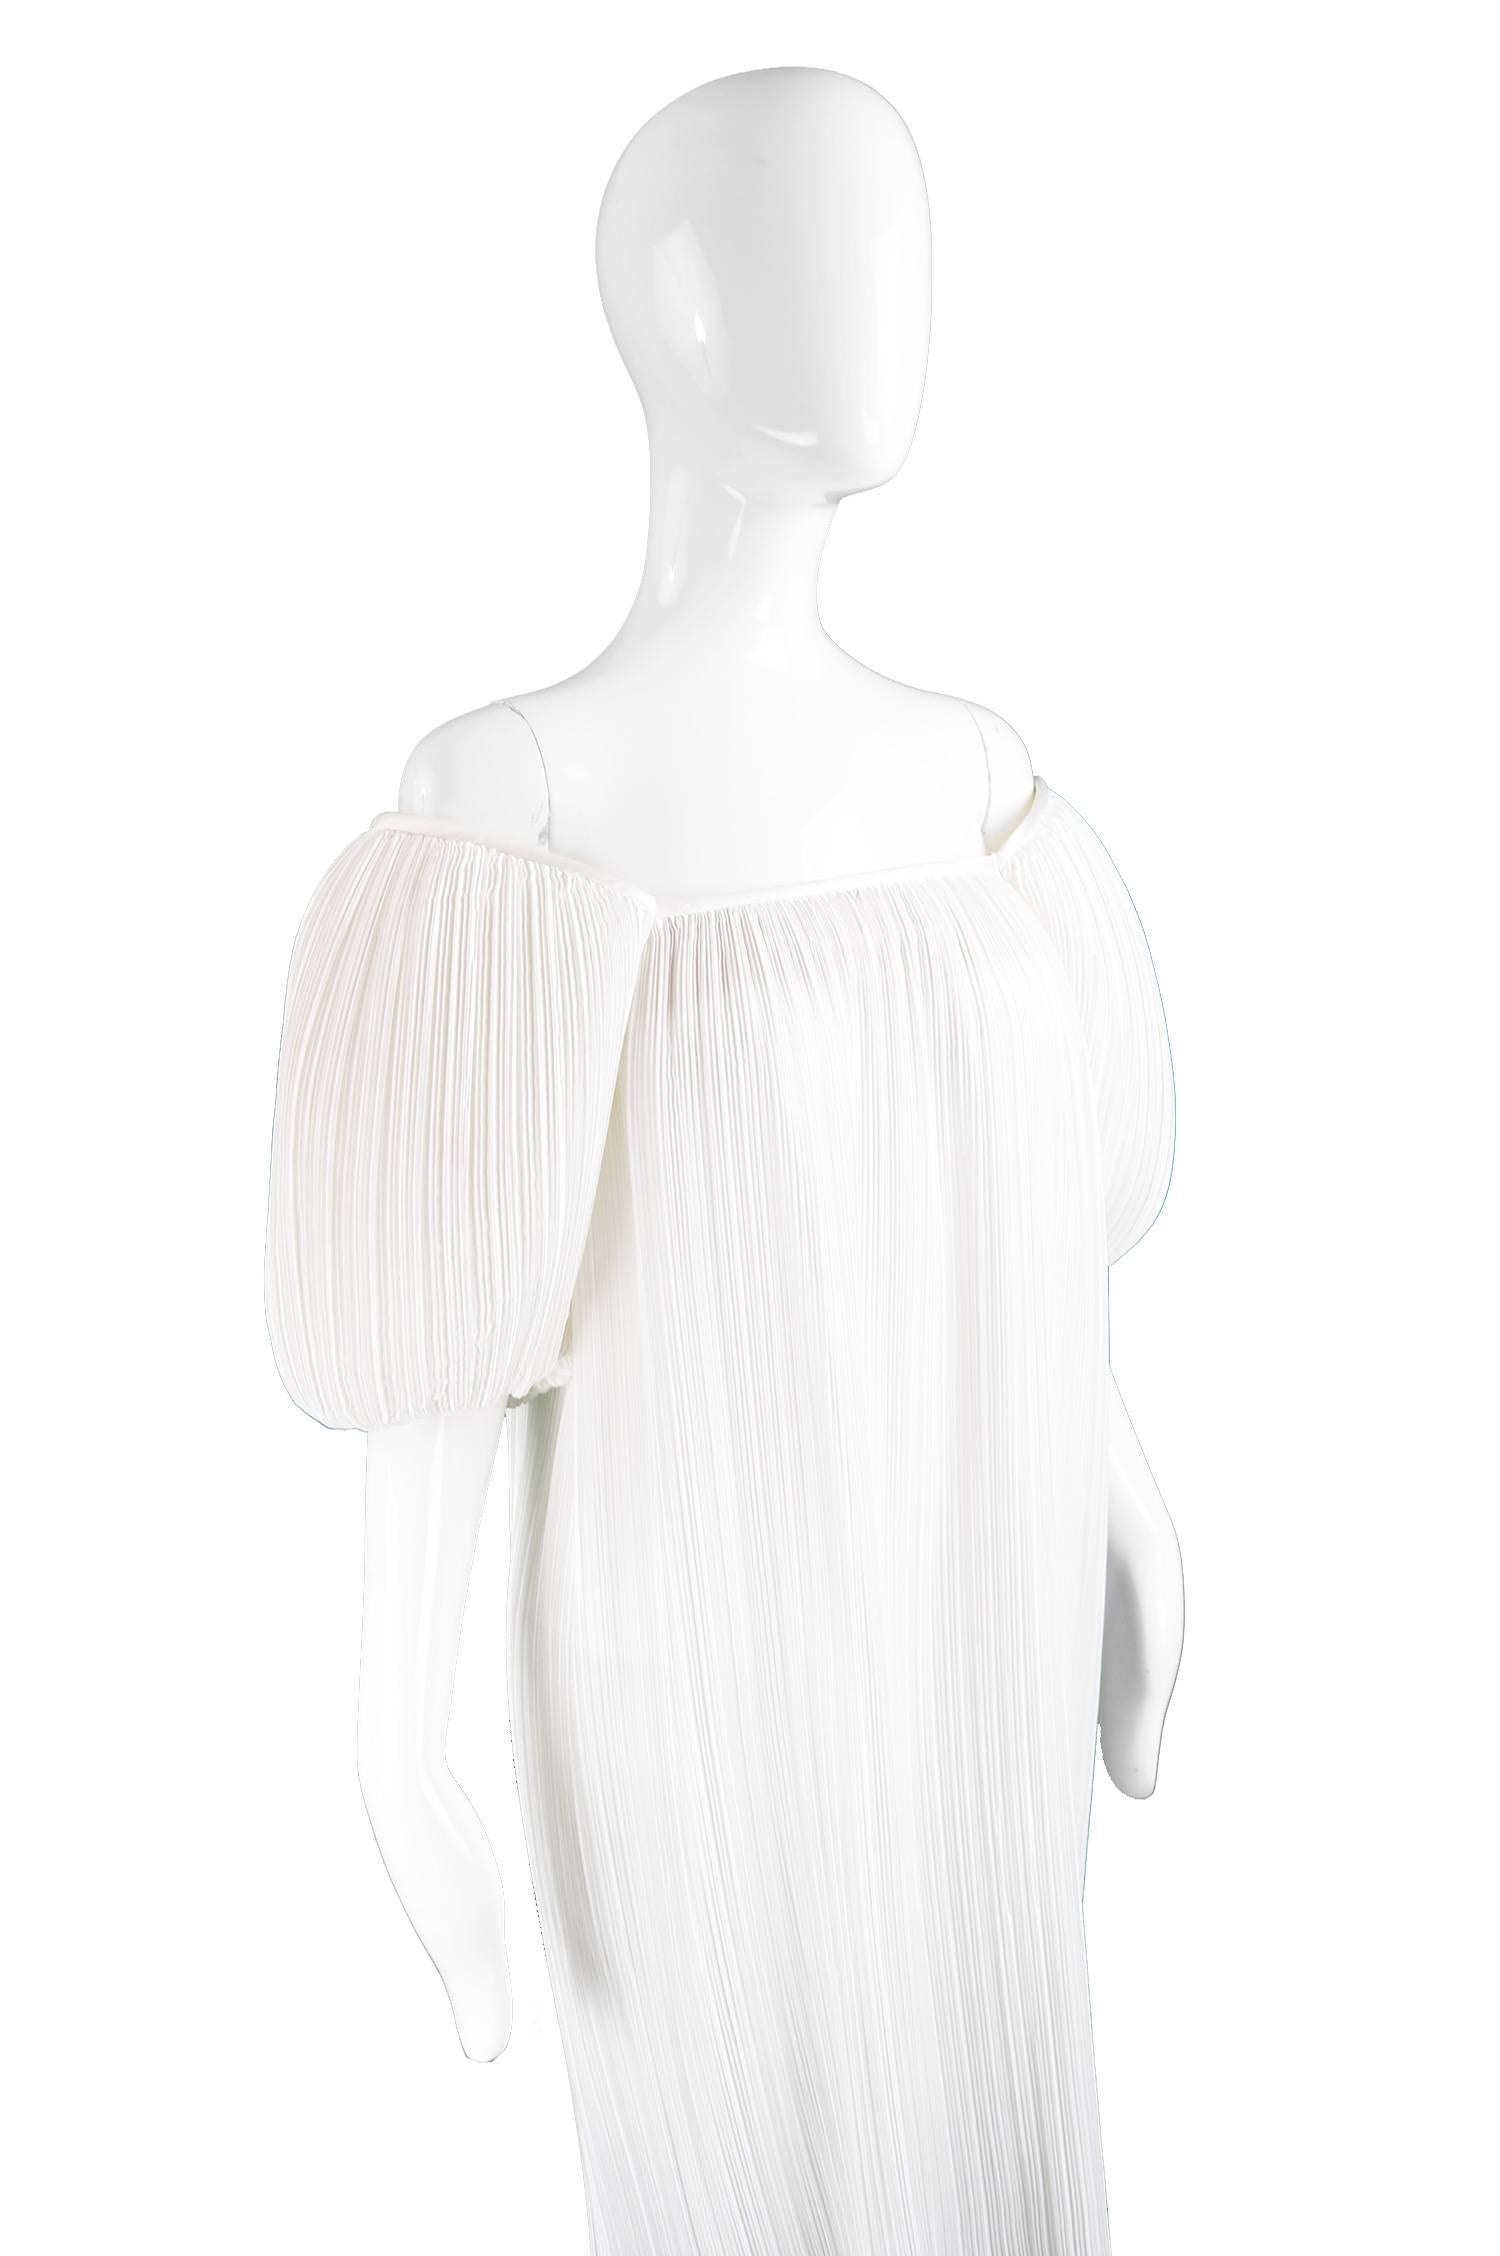 Women's S.G. Gilbert for I. Magnin Ethereal White Vintage Fortuny Pleat Dress, 1980s